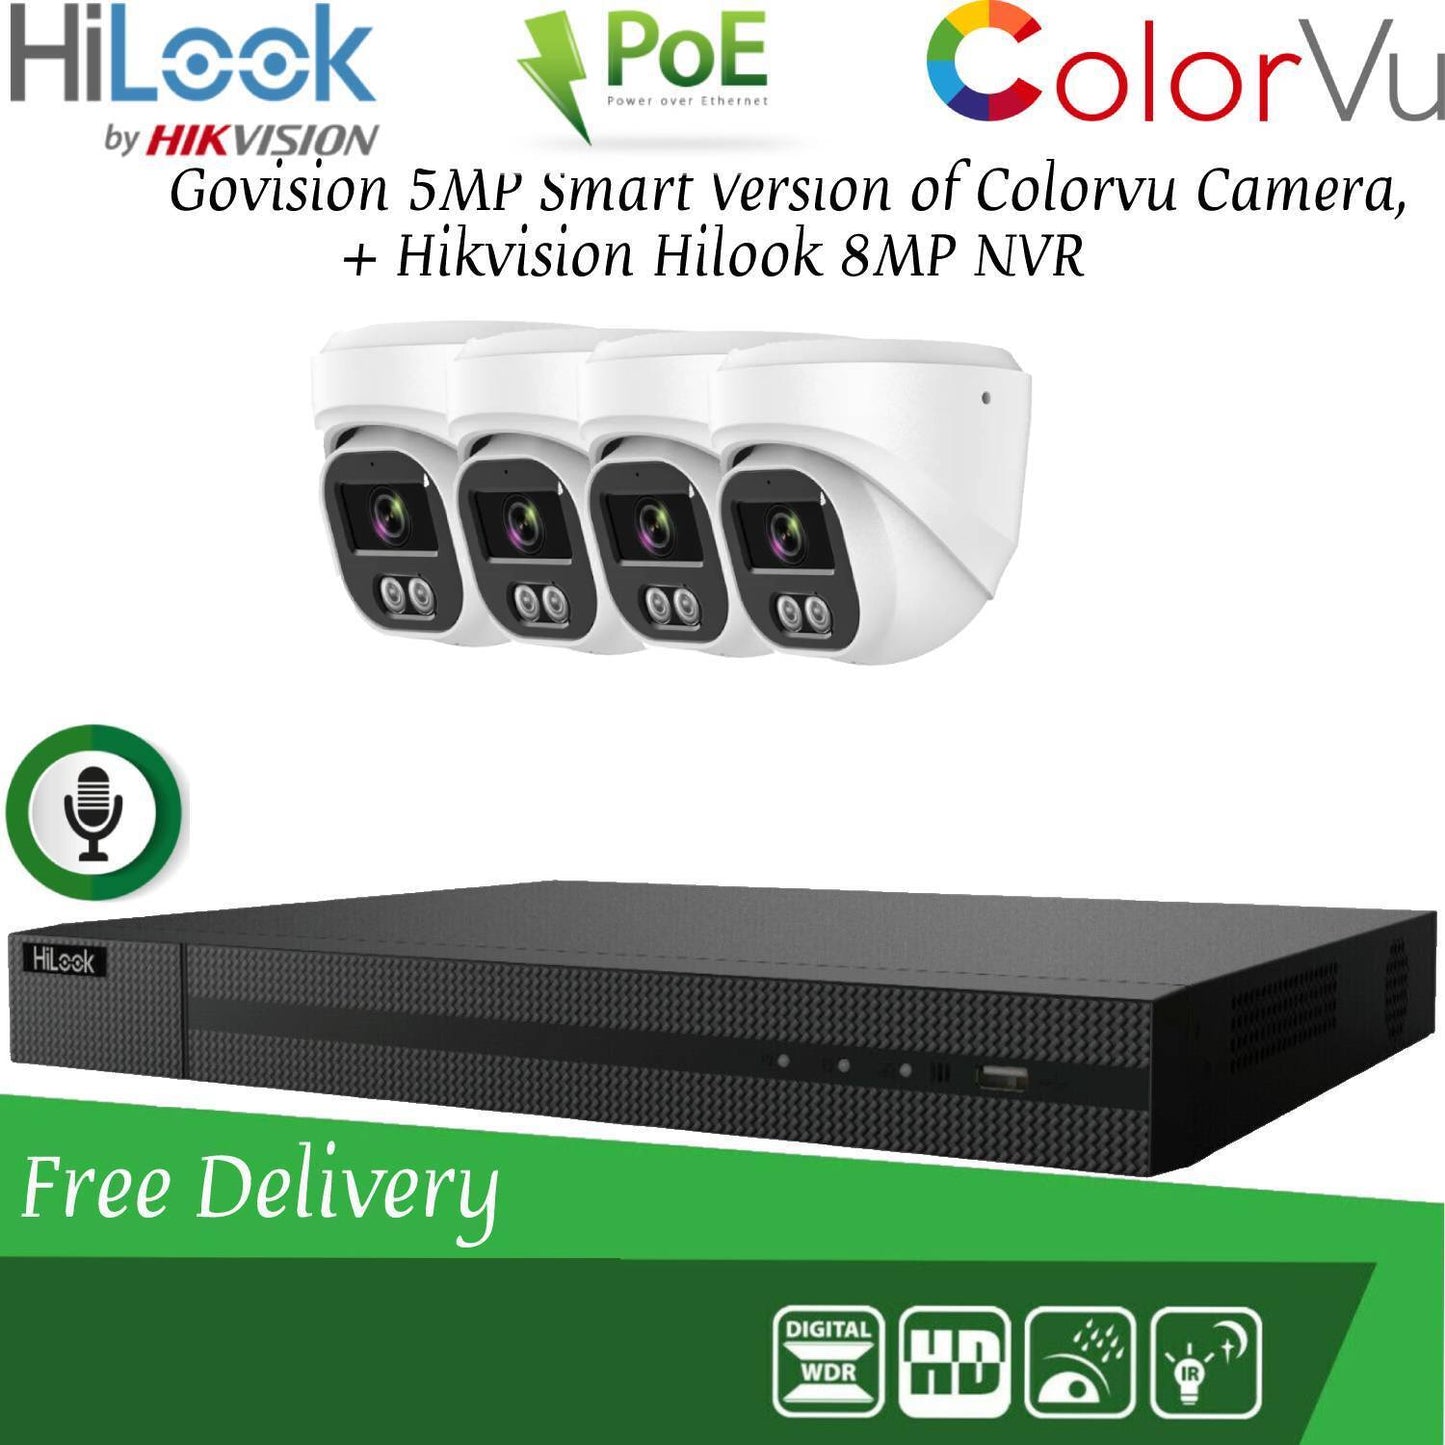 HIKVISION 8MP POE CCTV SYSTEM IP UHD NVR 5MP 24/7 COLORVU AUDIO MIC CAMERA KIT 4CH DVR 4x Cameras(white) 4TB HDD